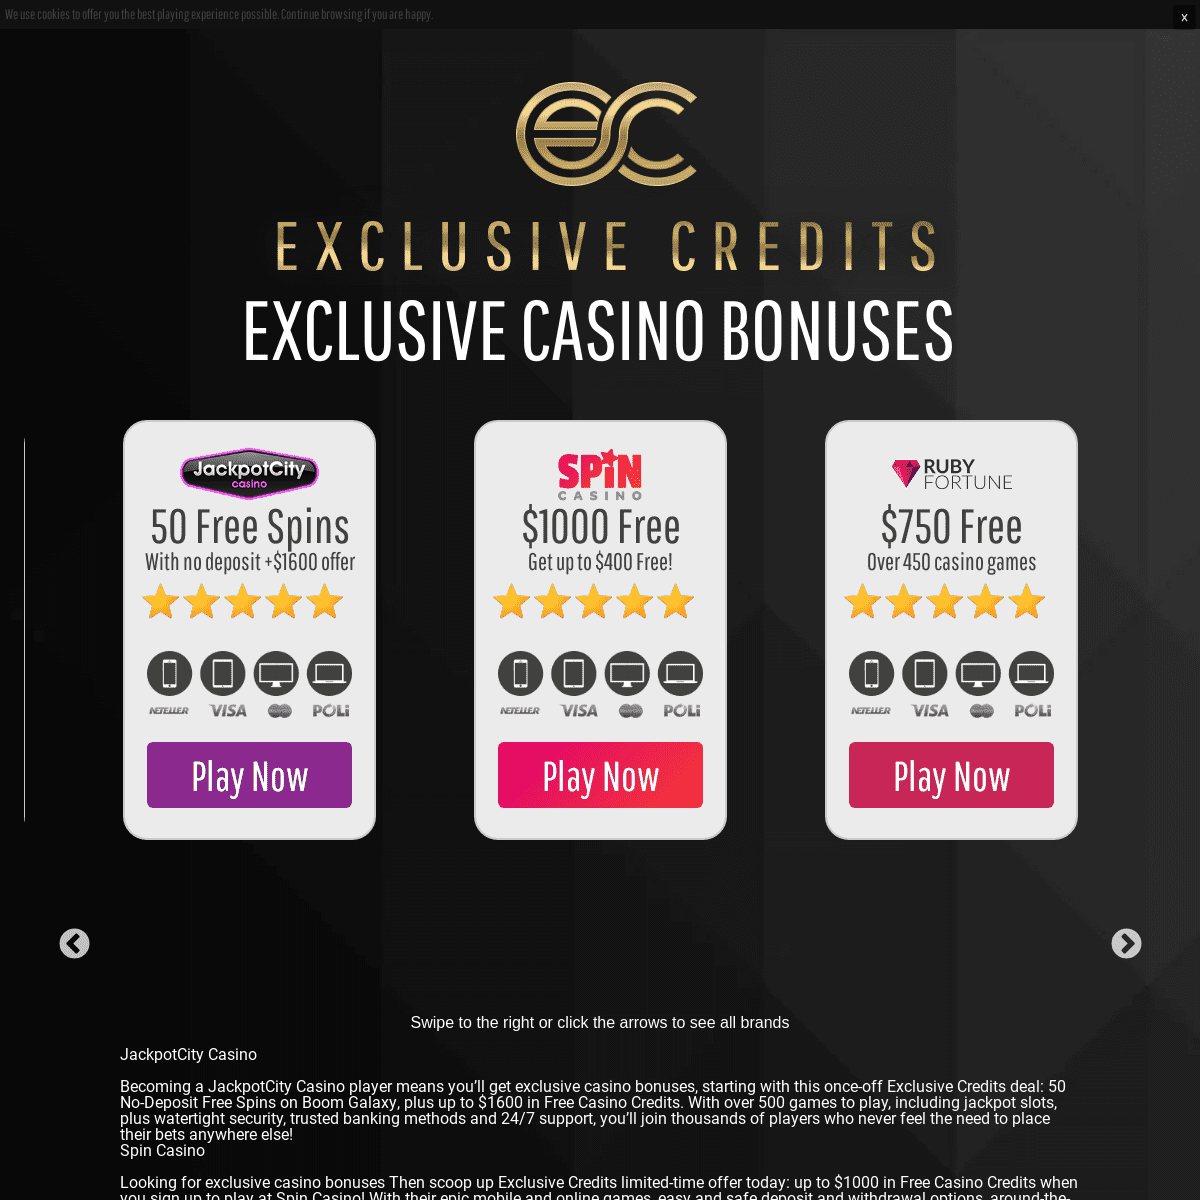 Exclusive Credits. The best casino bonuses online.